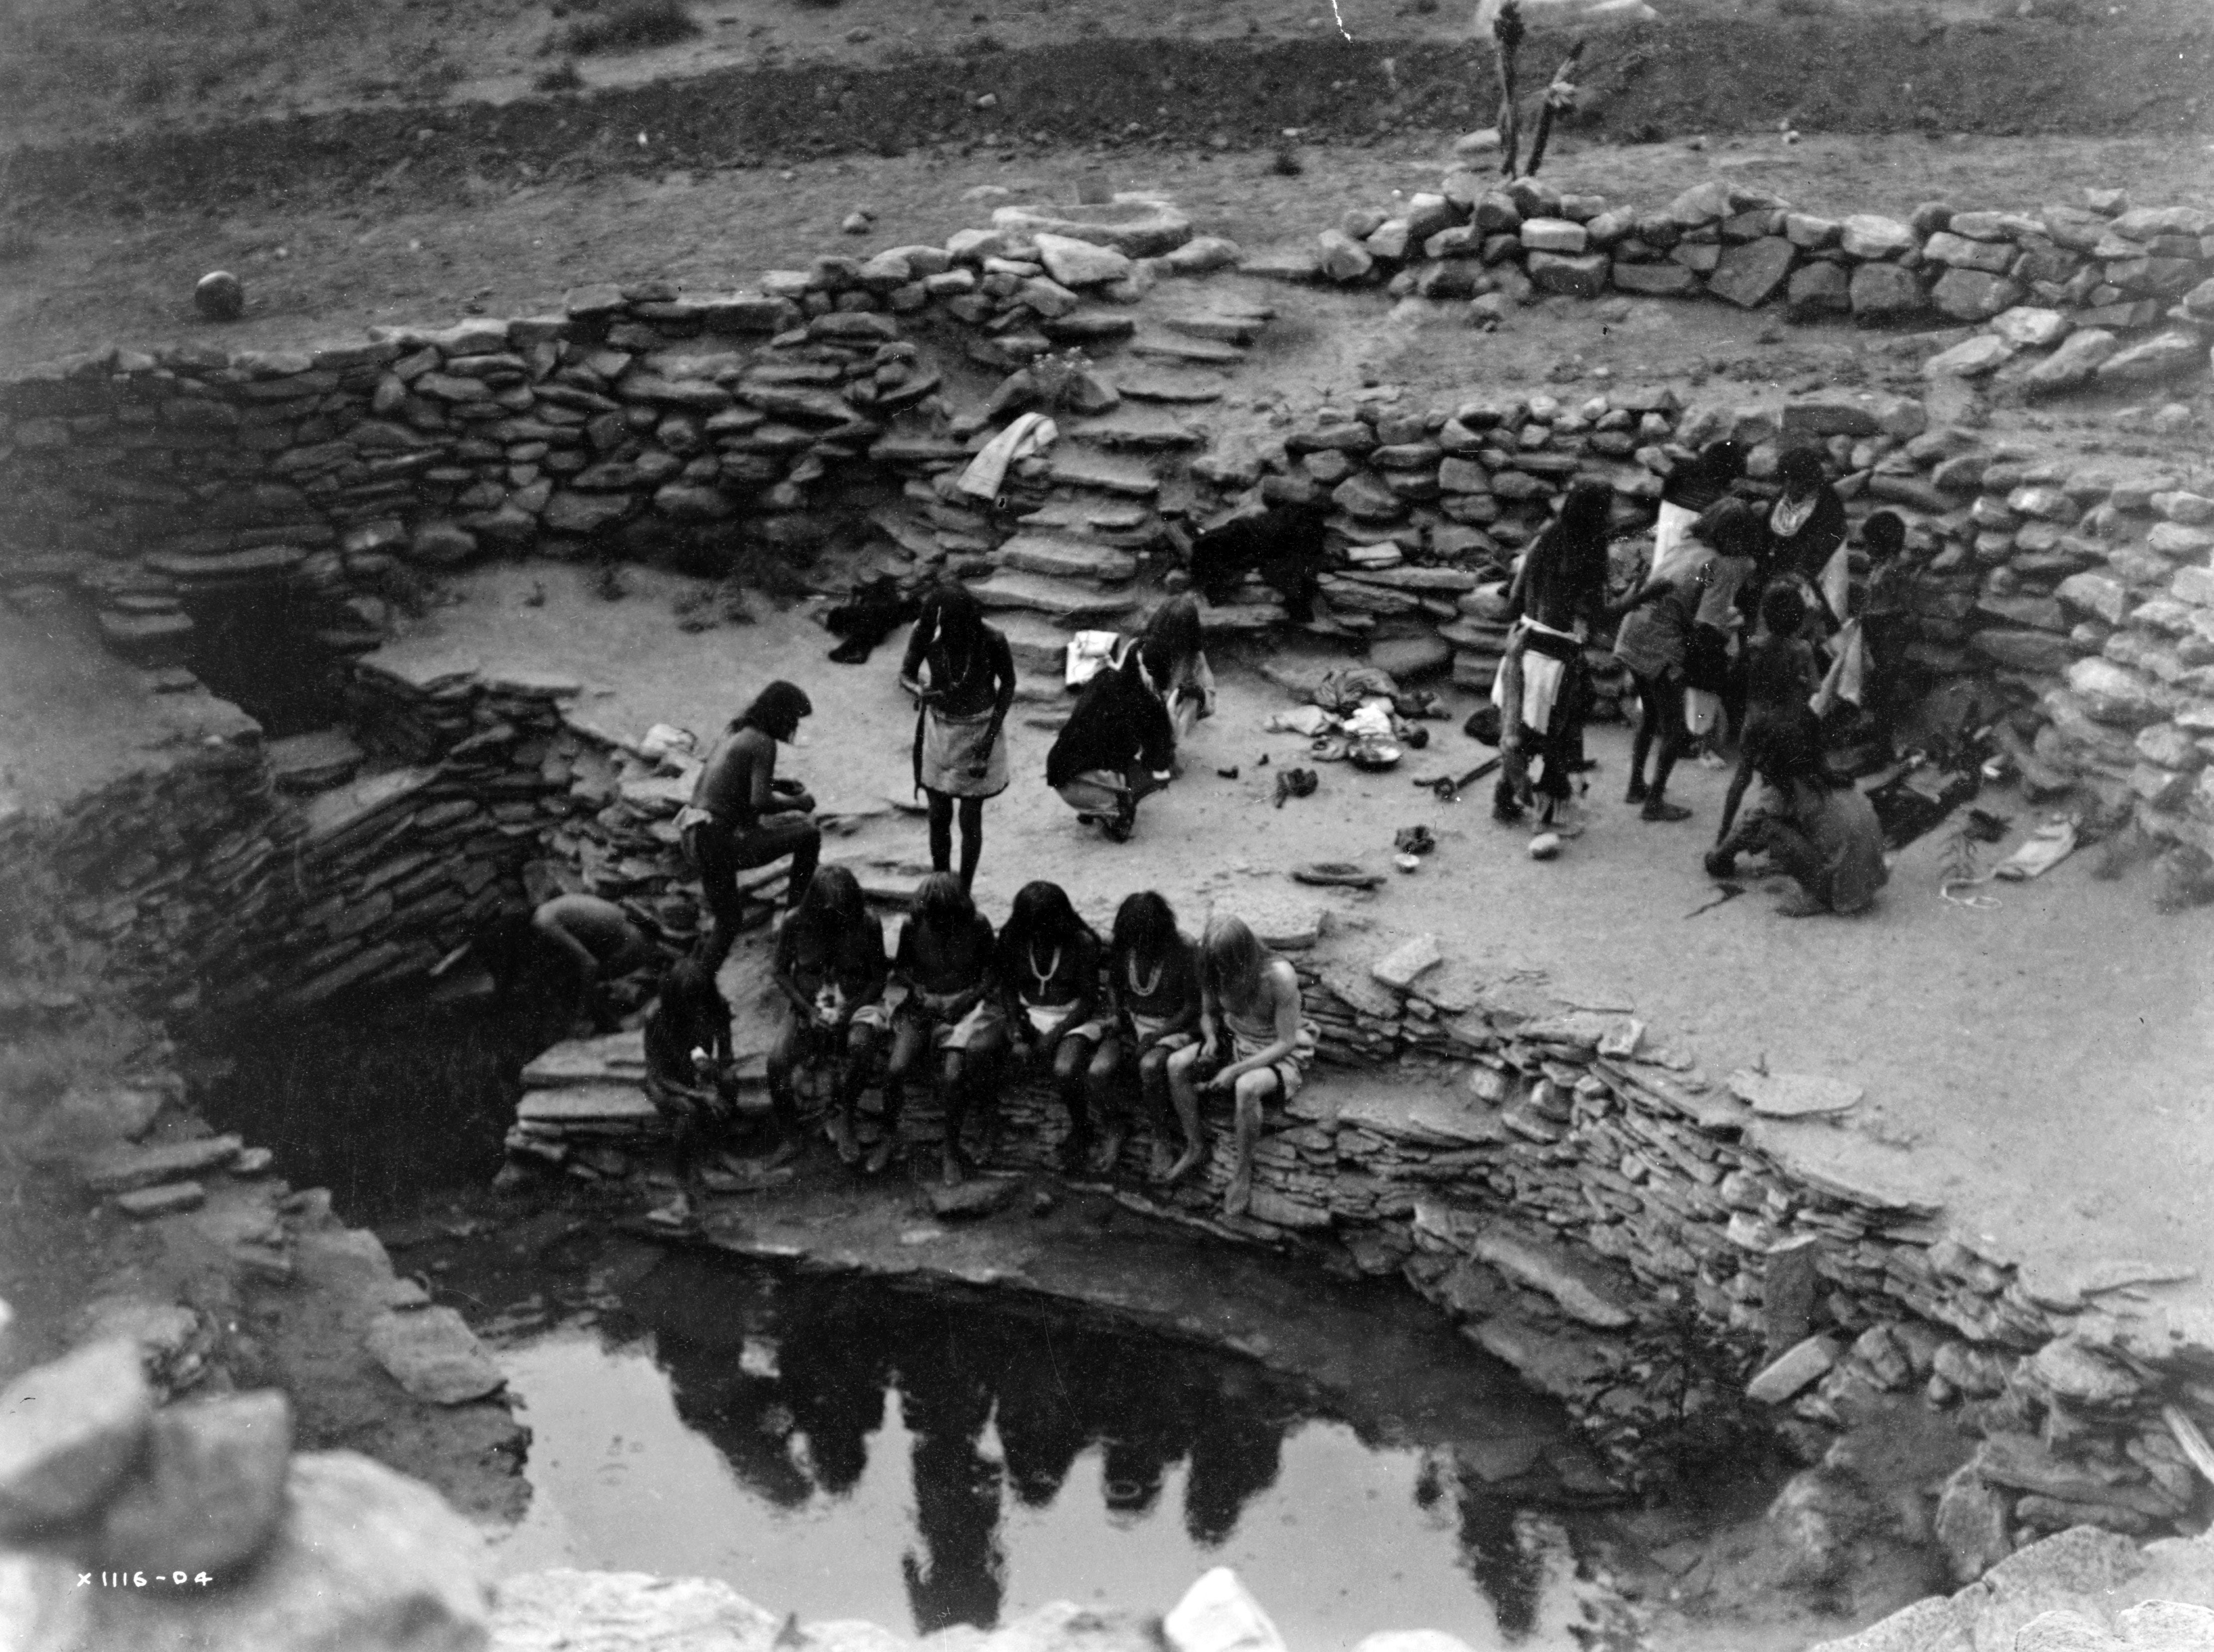 Hopi people gather for a flute ceremony at Toreva Spring in Mishongnovi on the Hopi Reservation in 1905.